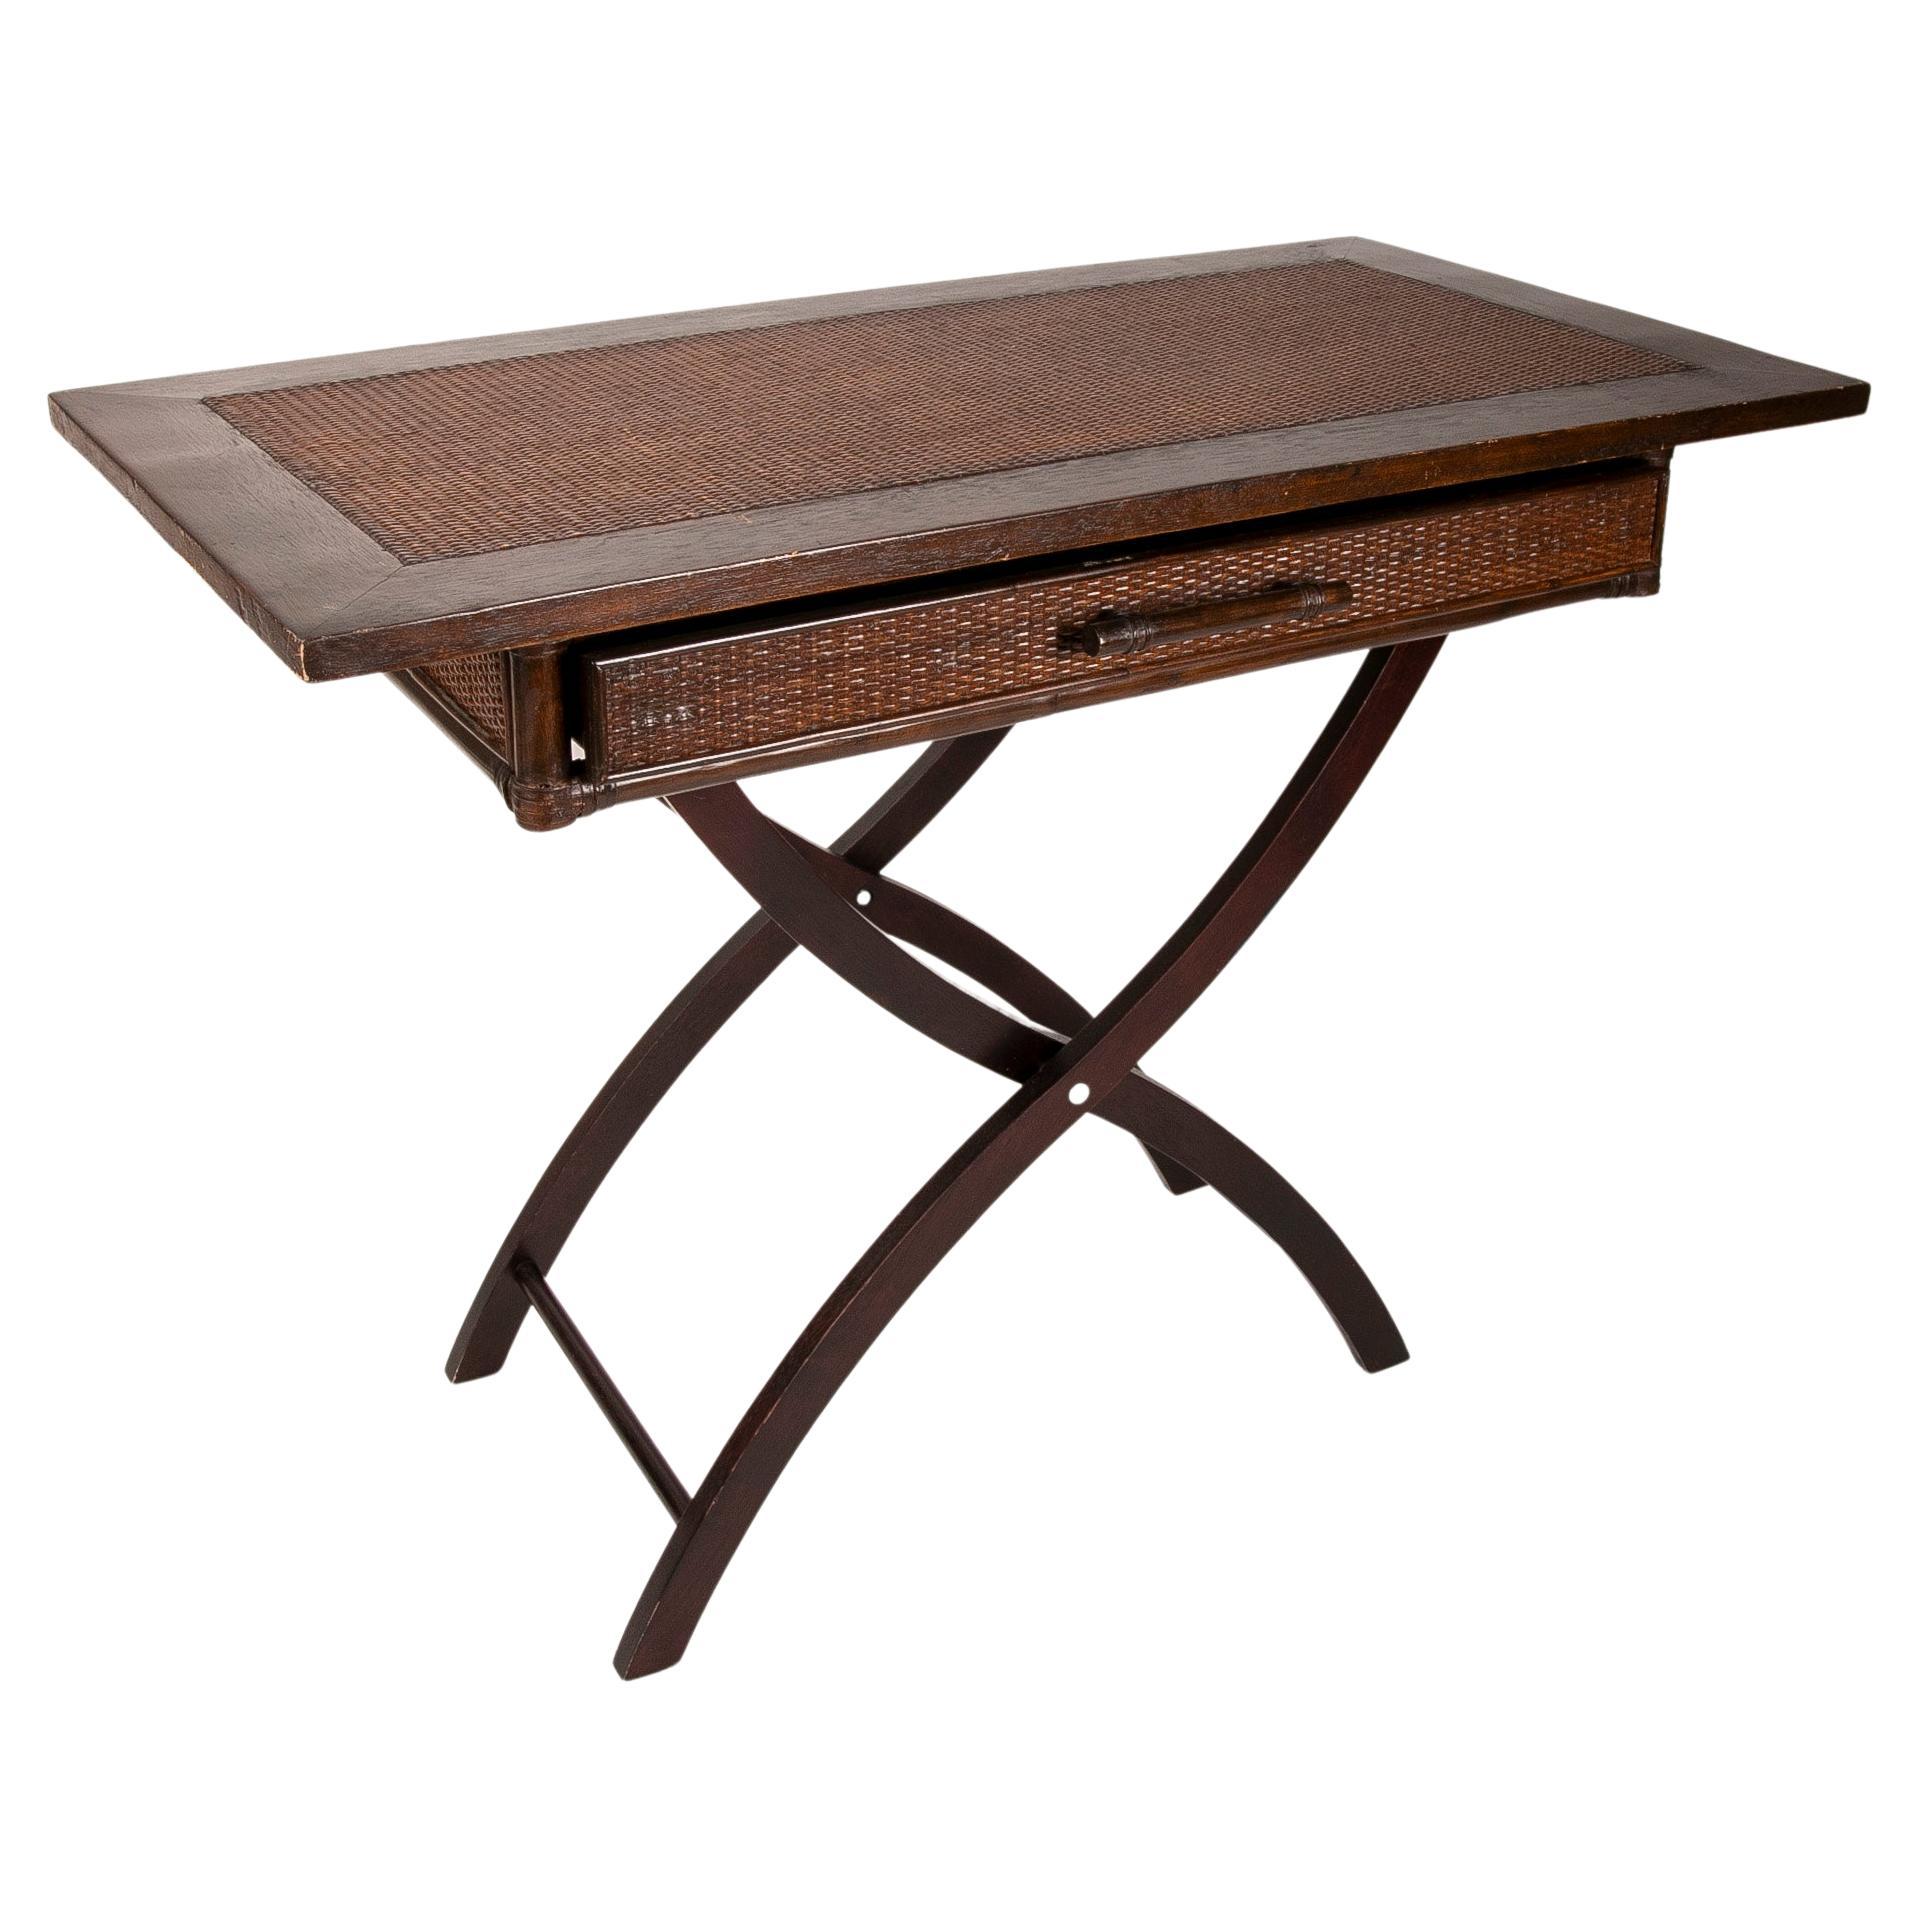 Table pliante en bois et osier avec tiroir frontal en vente